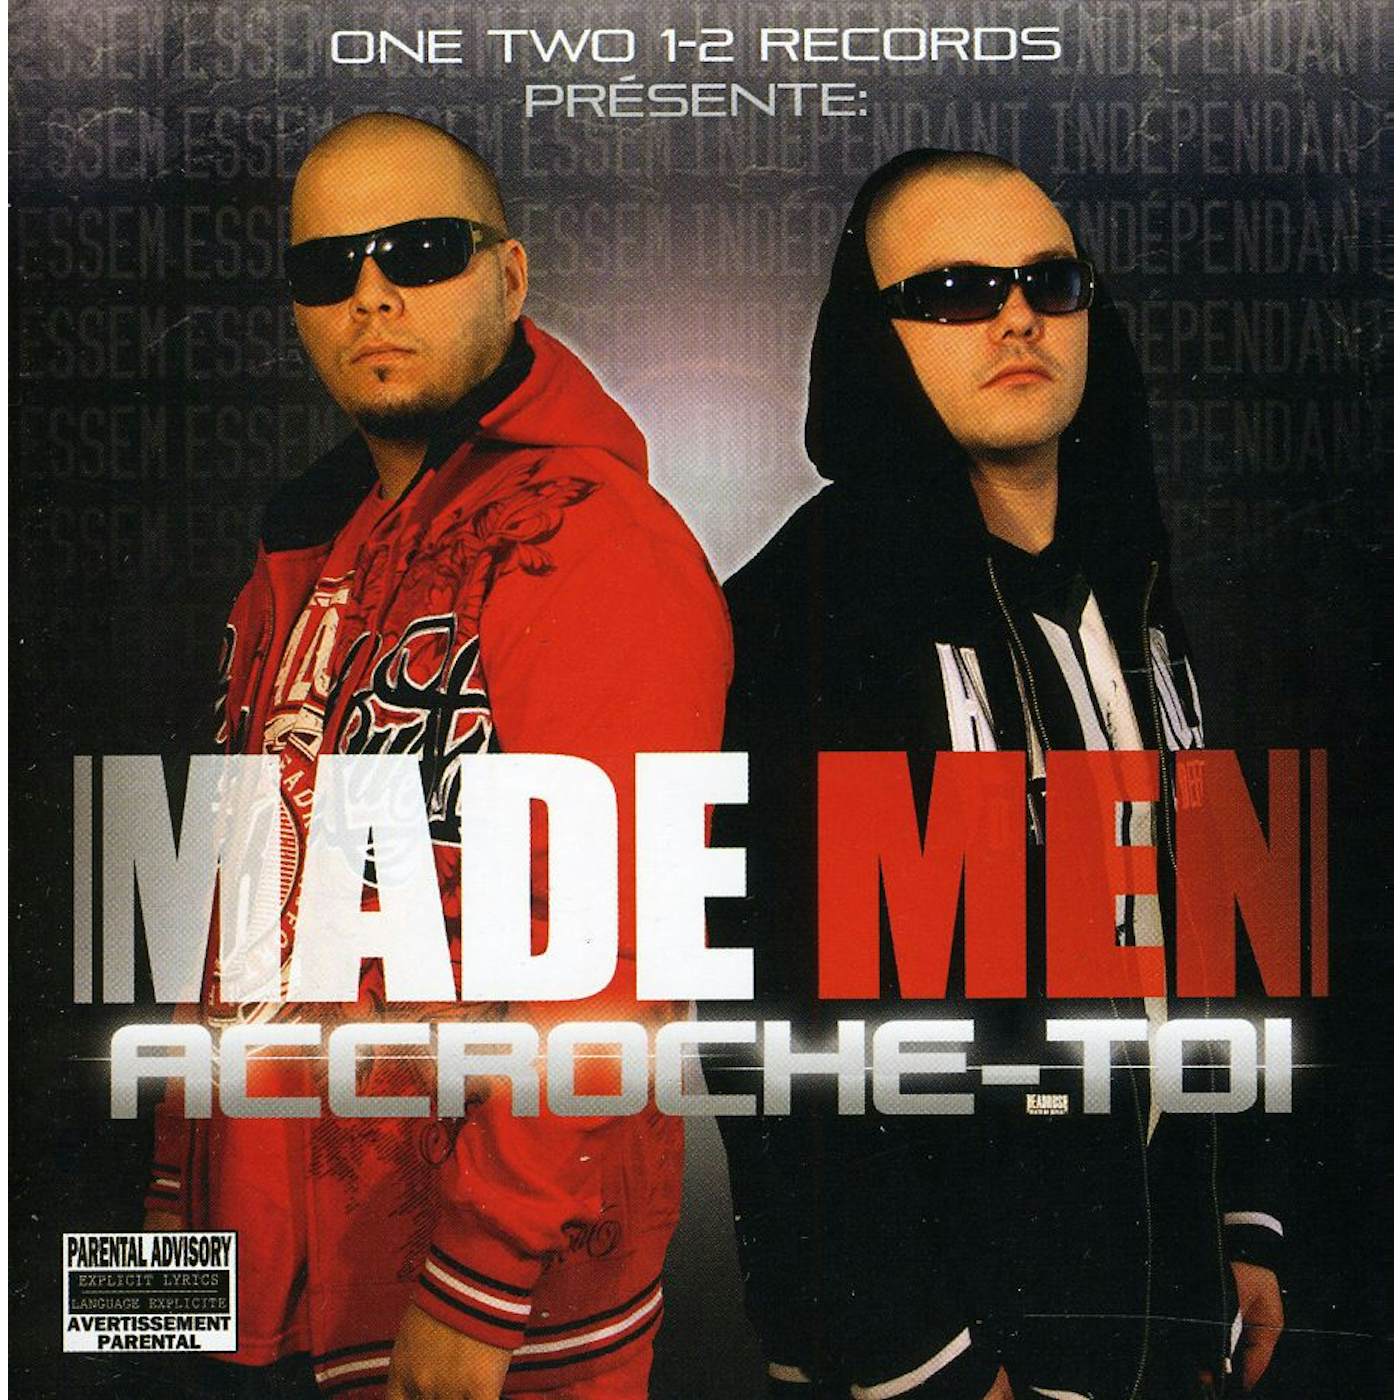 Made Men ACCROCHE-TOI CD